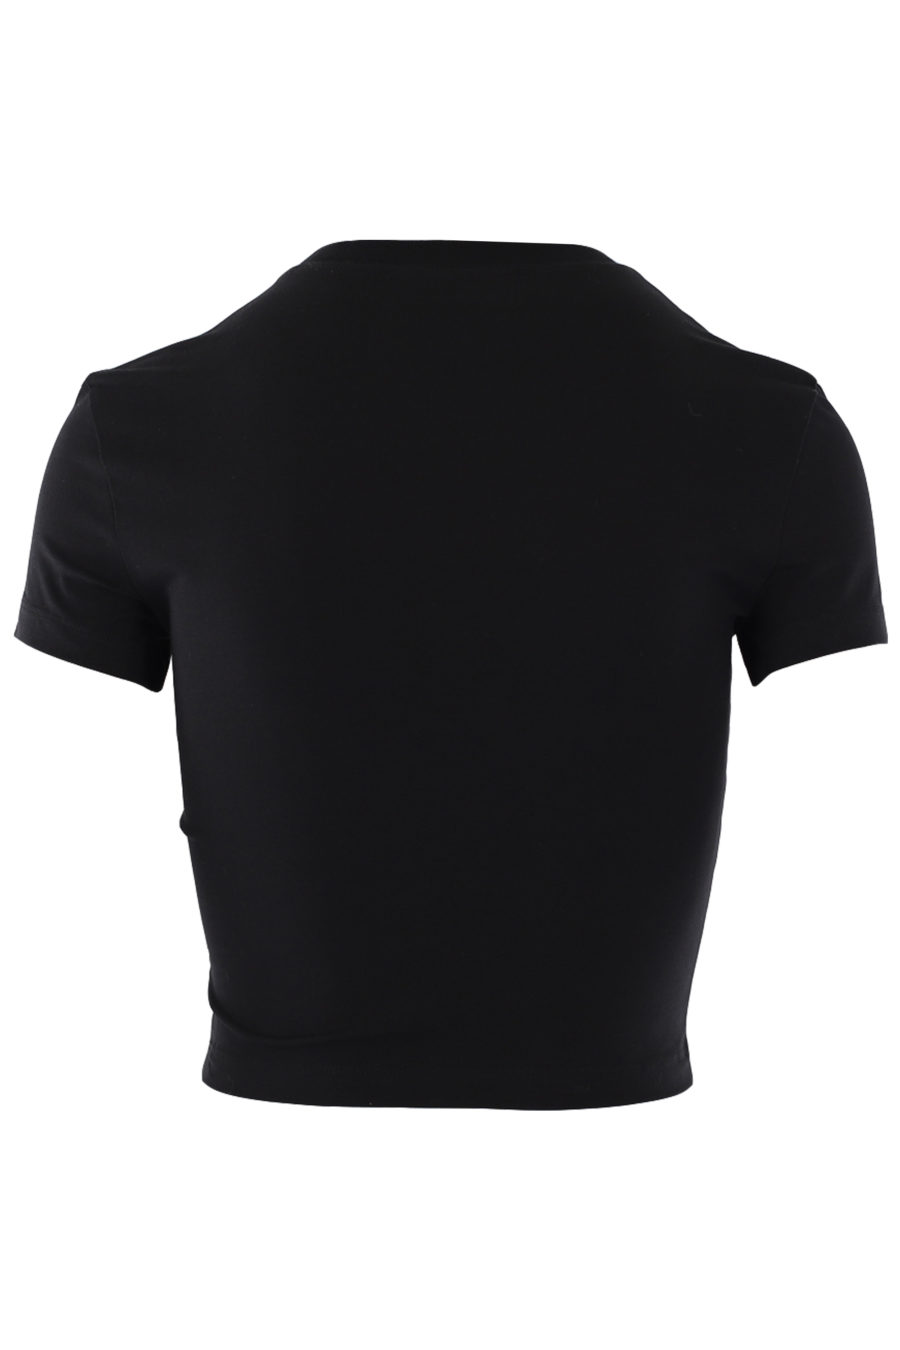 Camiseta negra con logo morado tornasol - IMG 0744